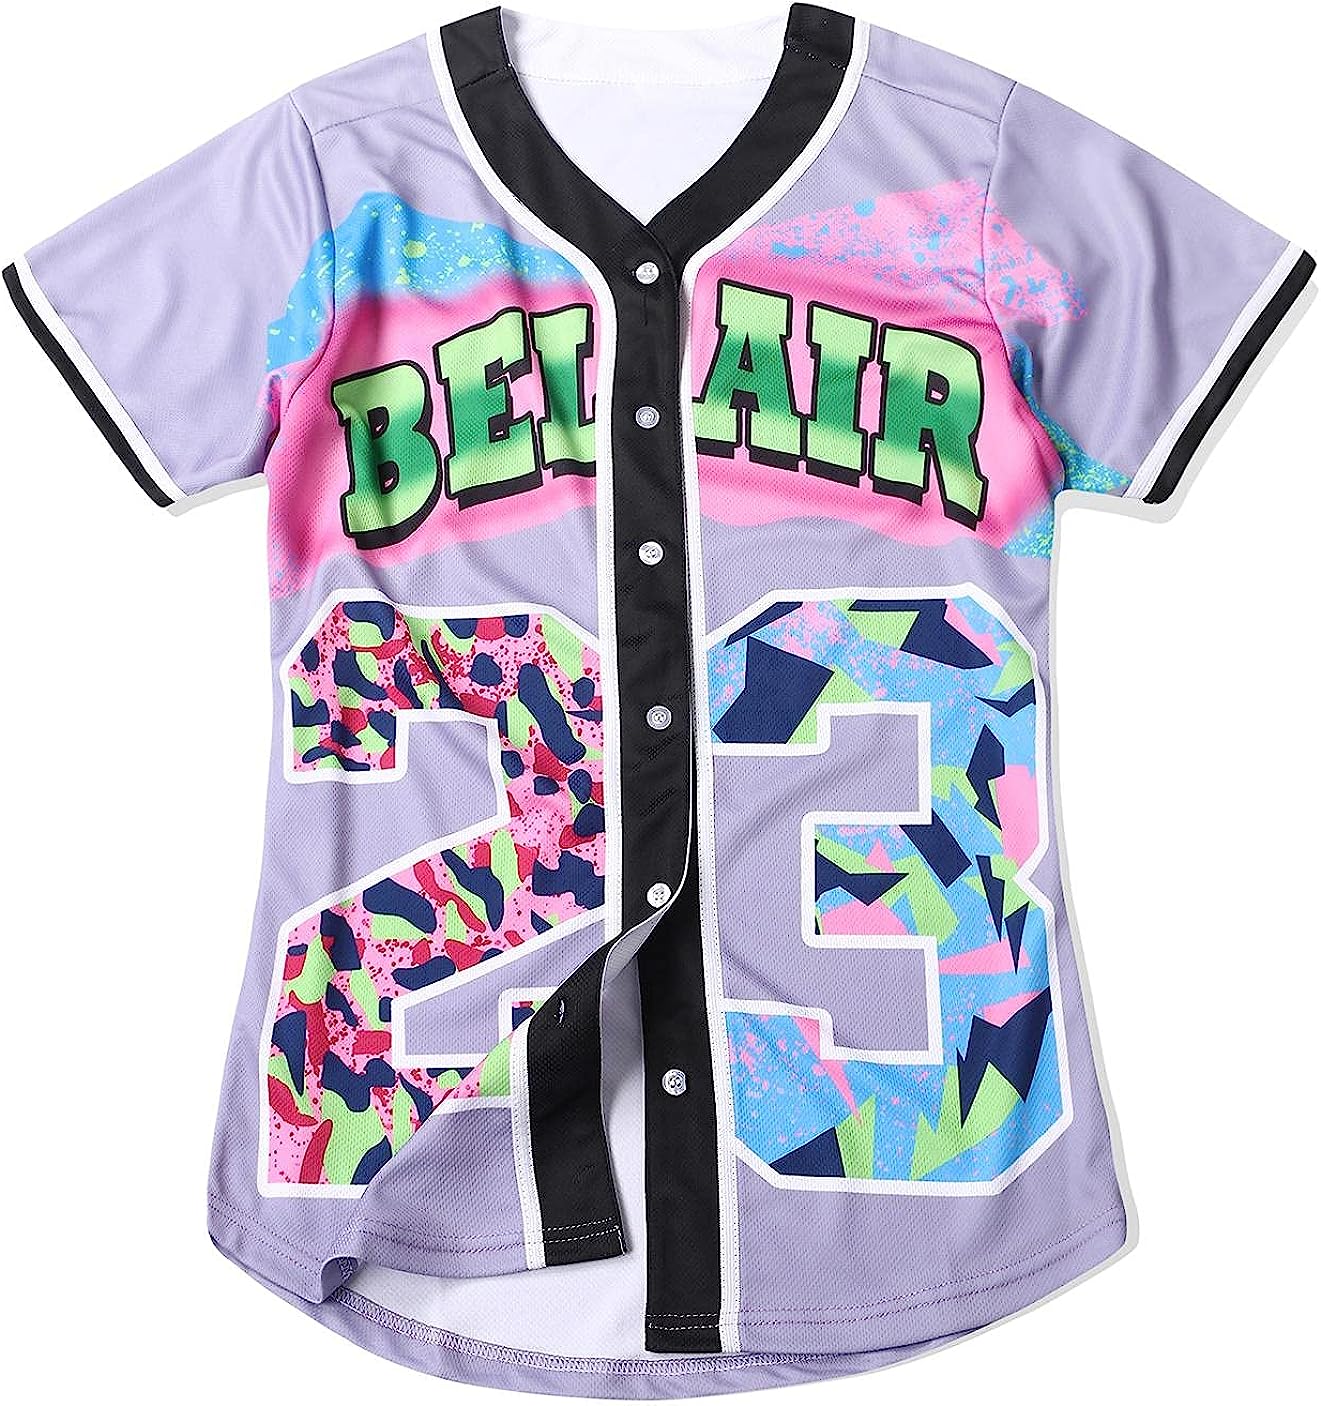 CUTHBERT 90s Outfit for Women,Bel Air Baseball Jersey Shirt for Theme  Party,Shor